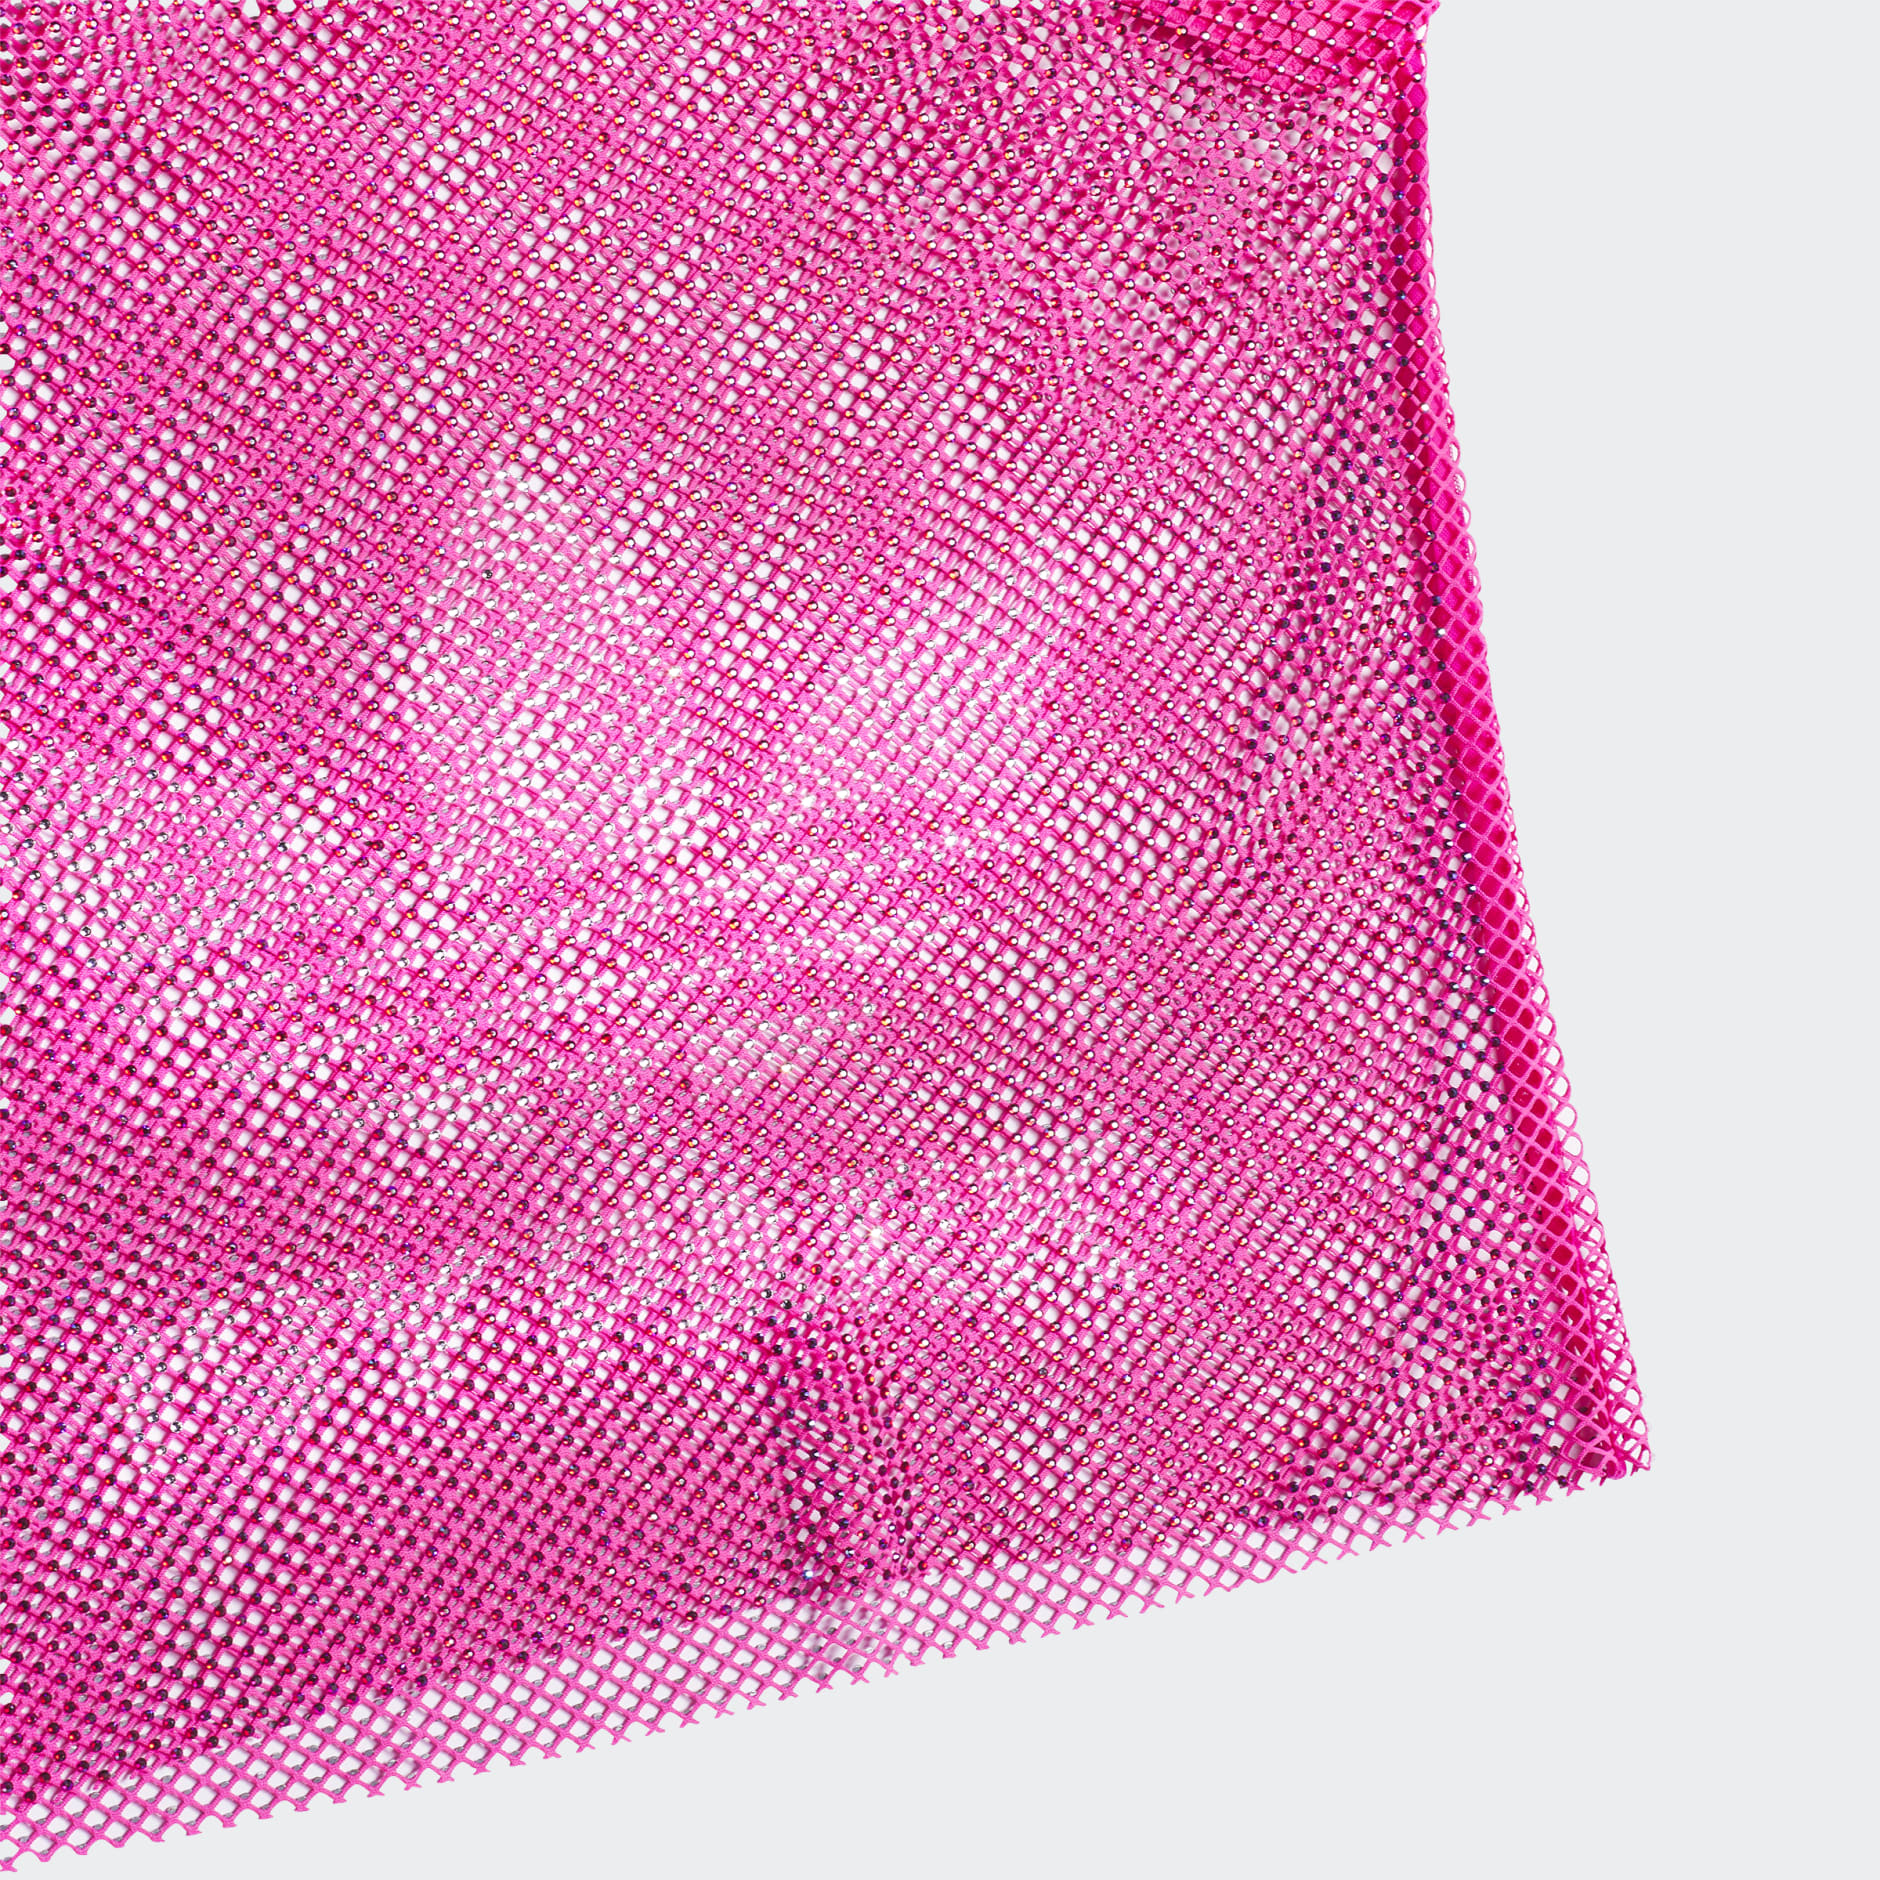 adidas IVY PARK Crystal Mesh Tank Top (All Gender) - Pink